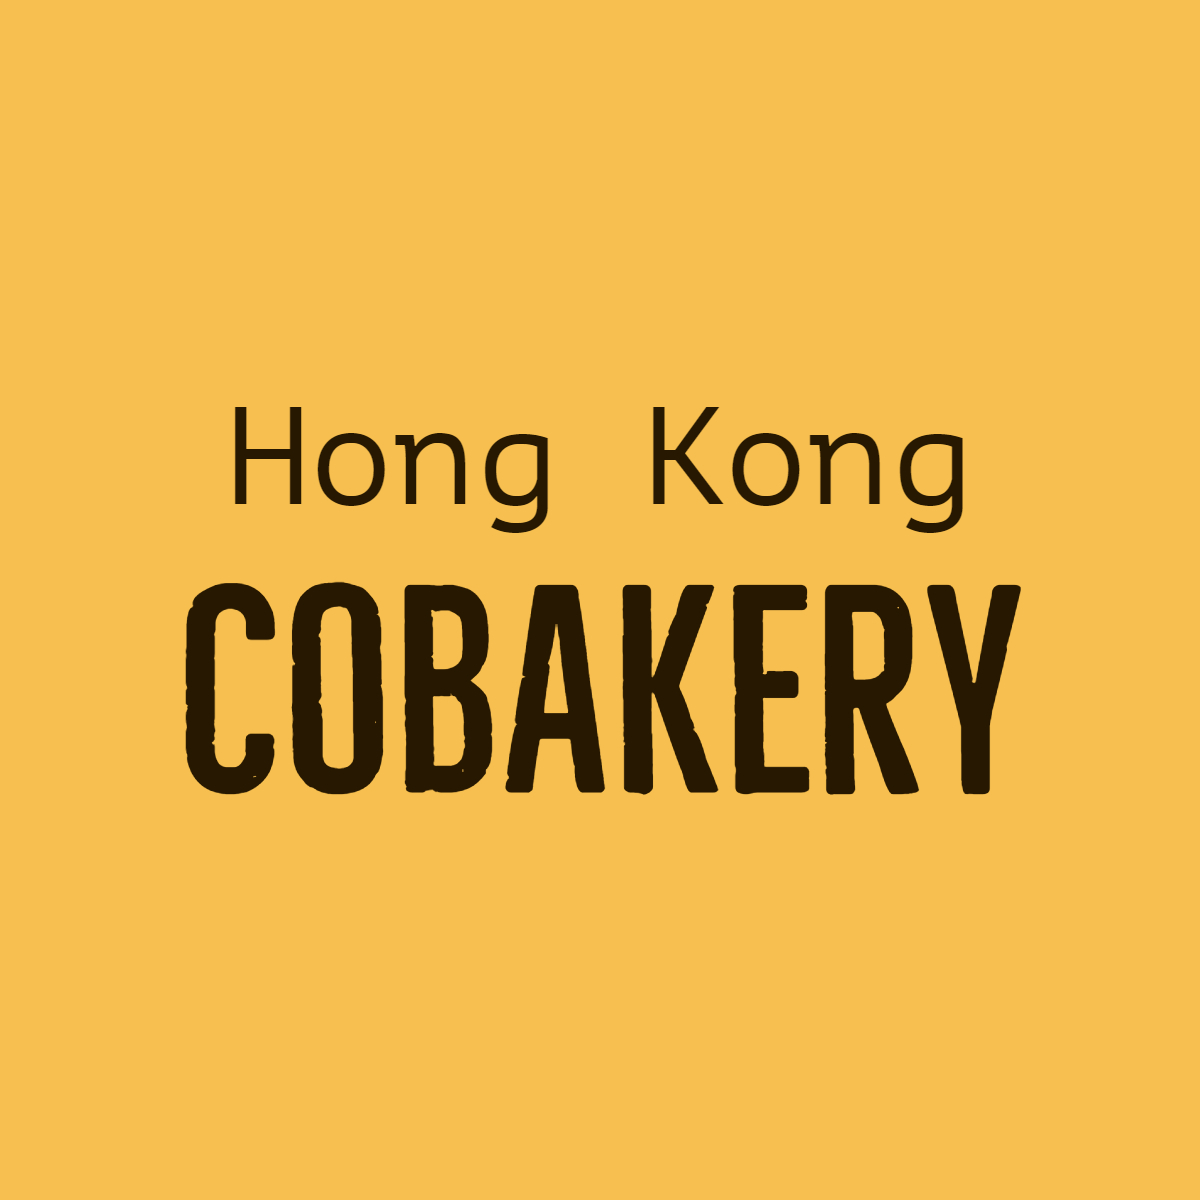 Erna's Hong Kong Co-bakery workshop